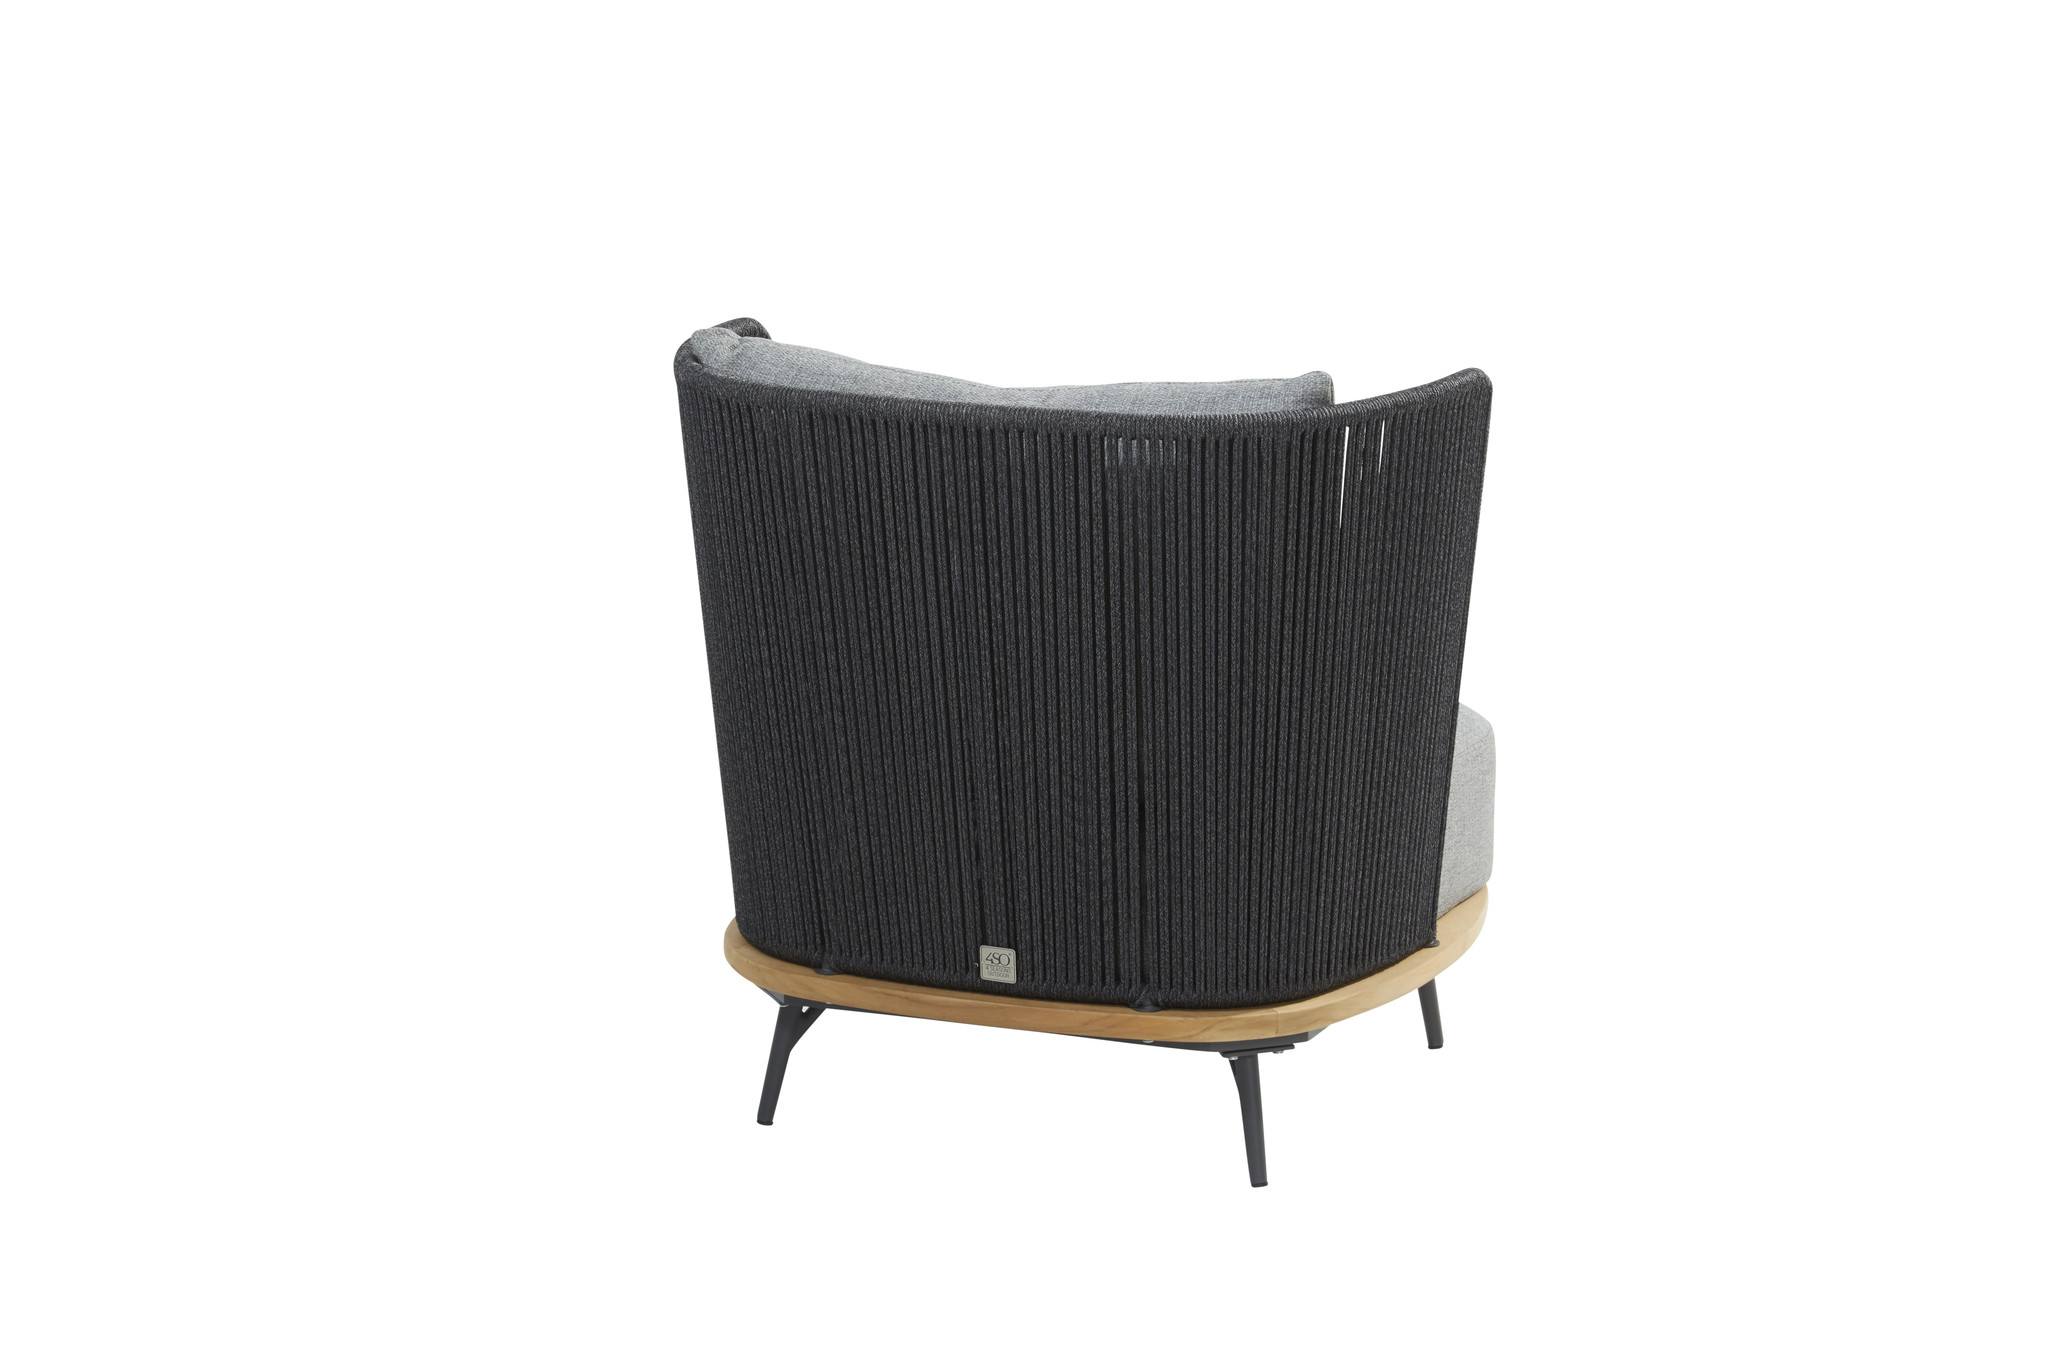 4 Seasons Springbed | furniture Outdoor mattress living - Positano | gascylinders outdoor chair 